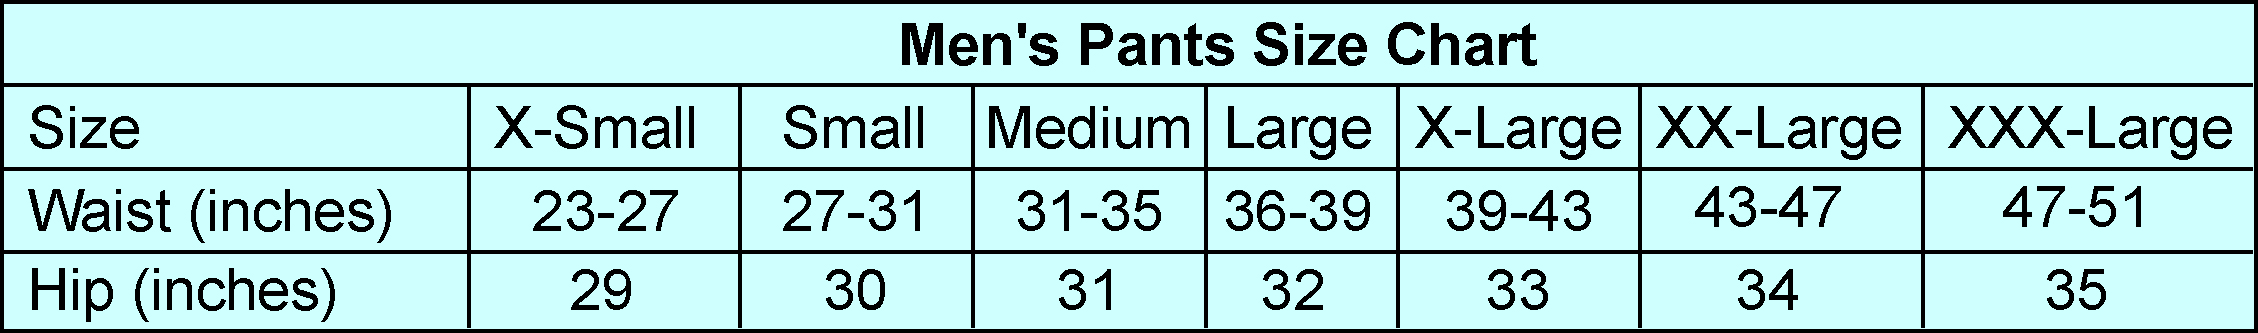 Men's pants size chart